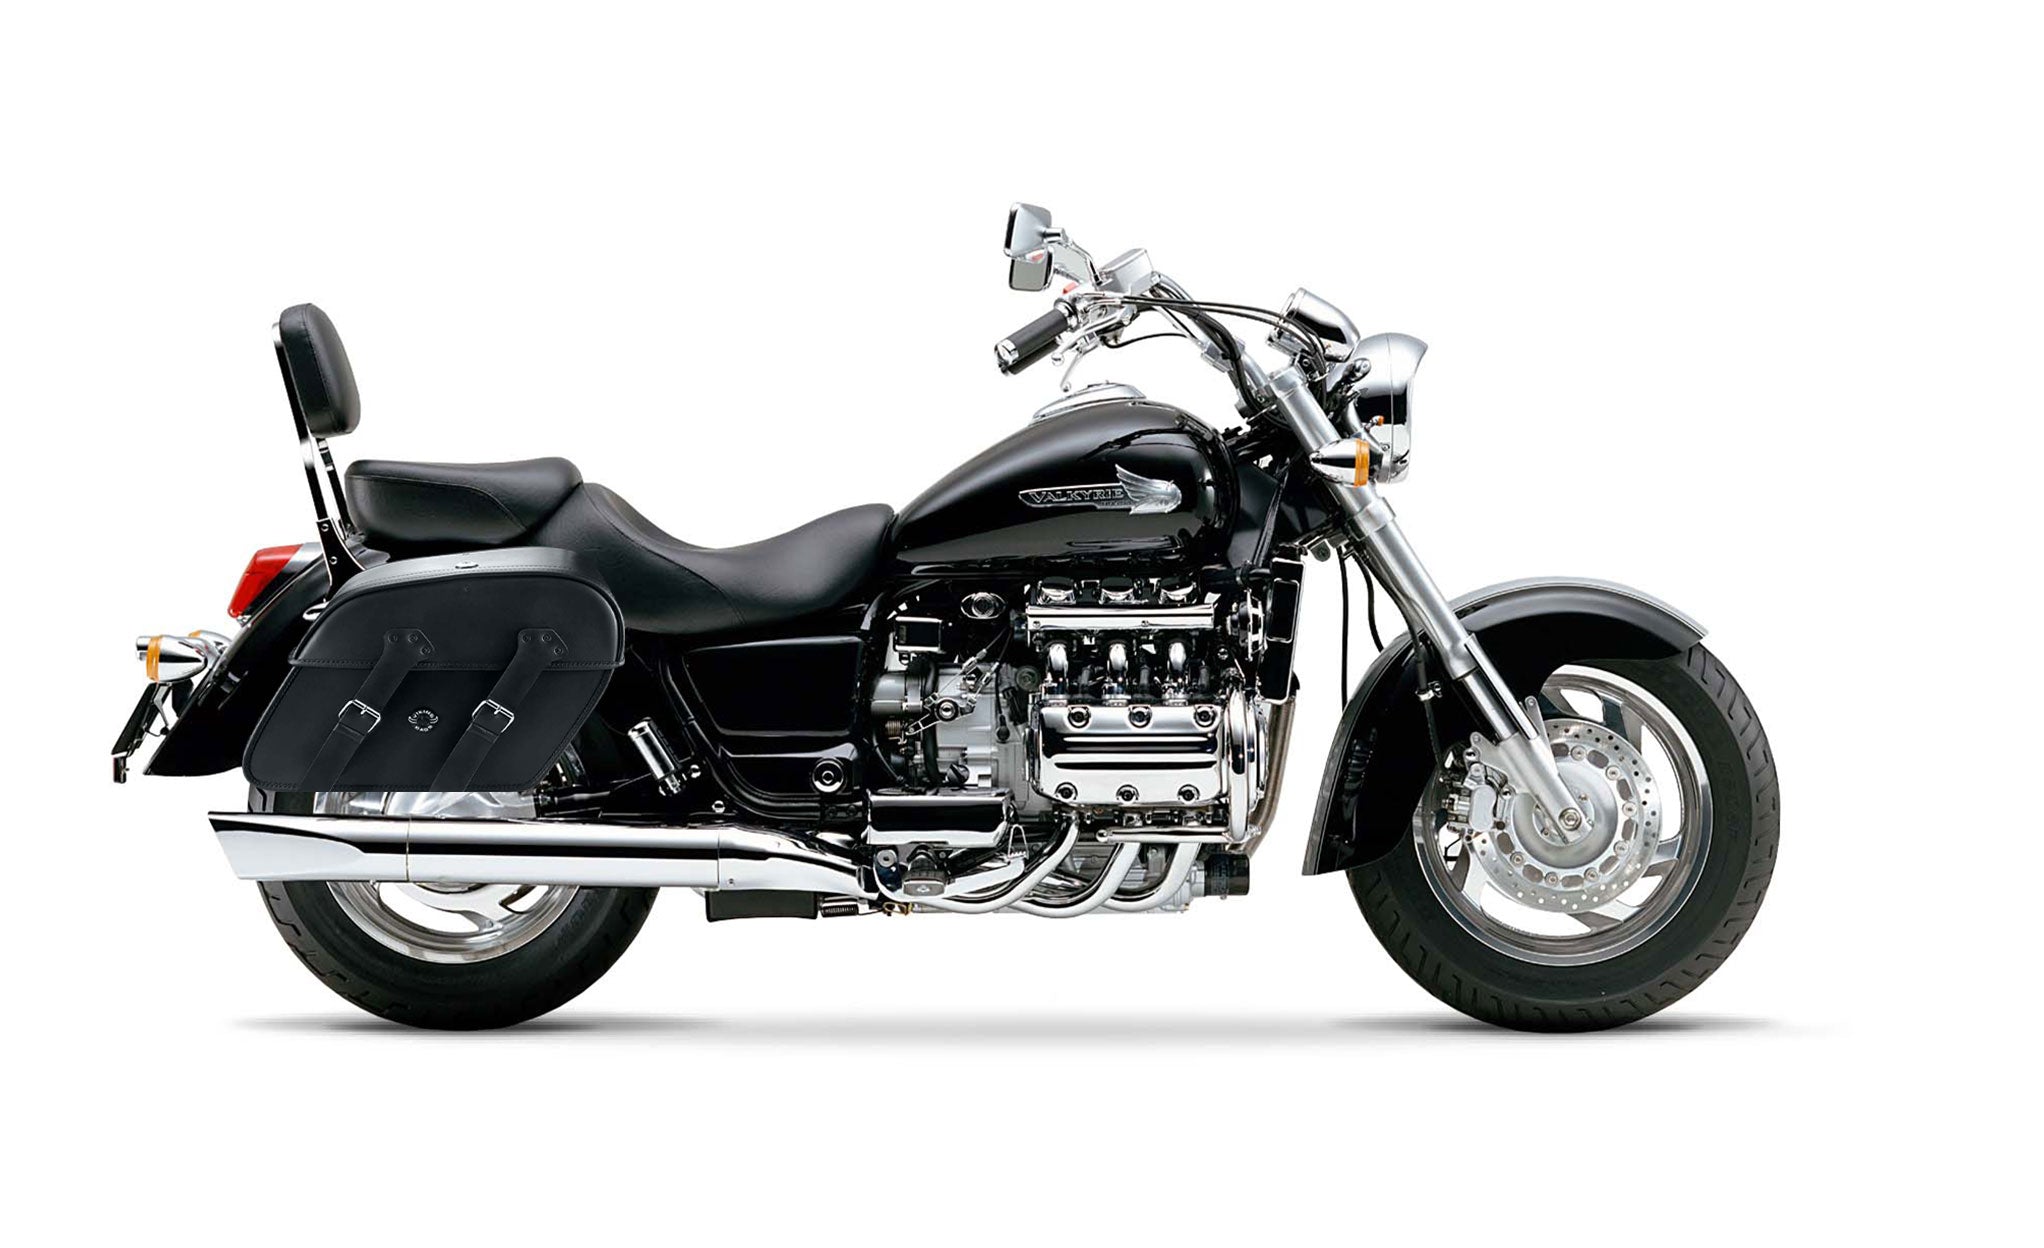 Viking Raven Extra Large Honda 1500 Valkyrie Standard Shock Cut Out Leather Motorcycle Saddlebags on Bike Photo @expand